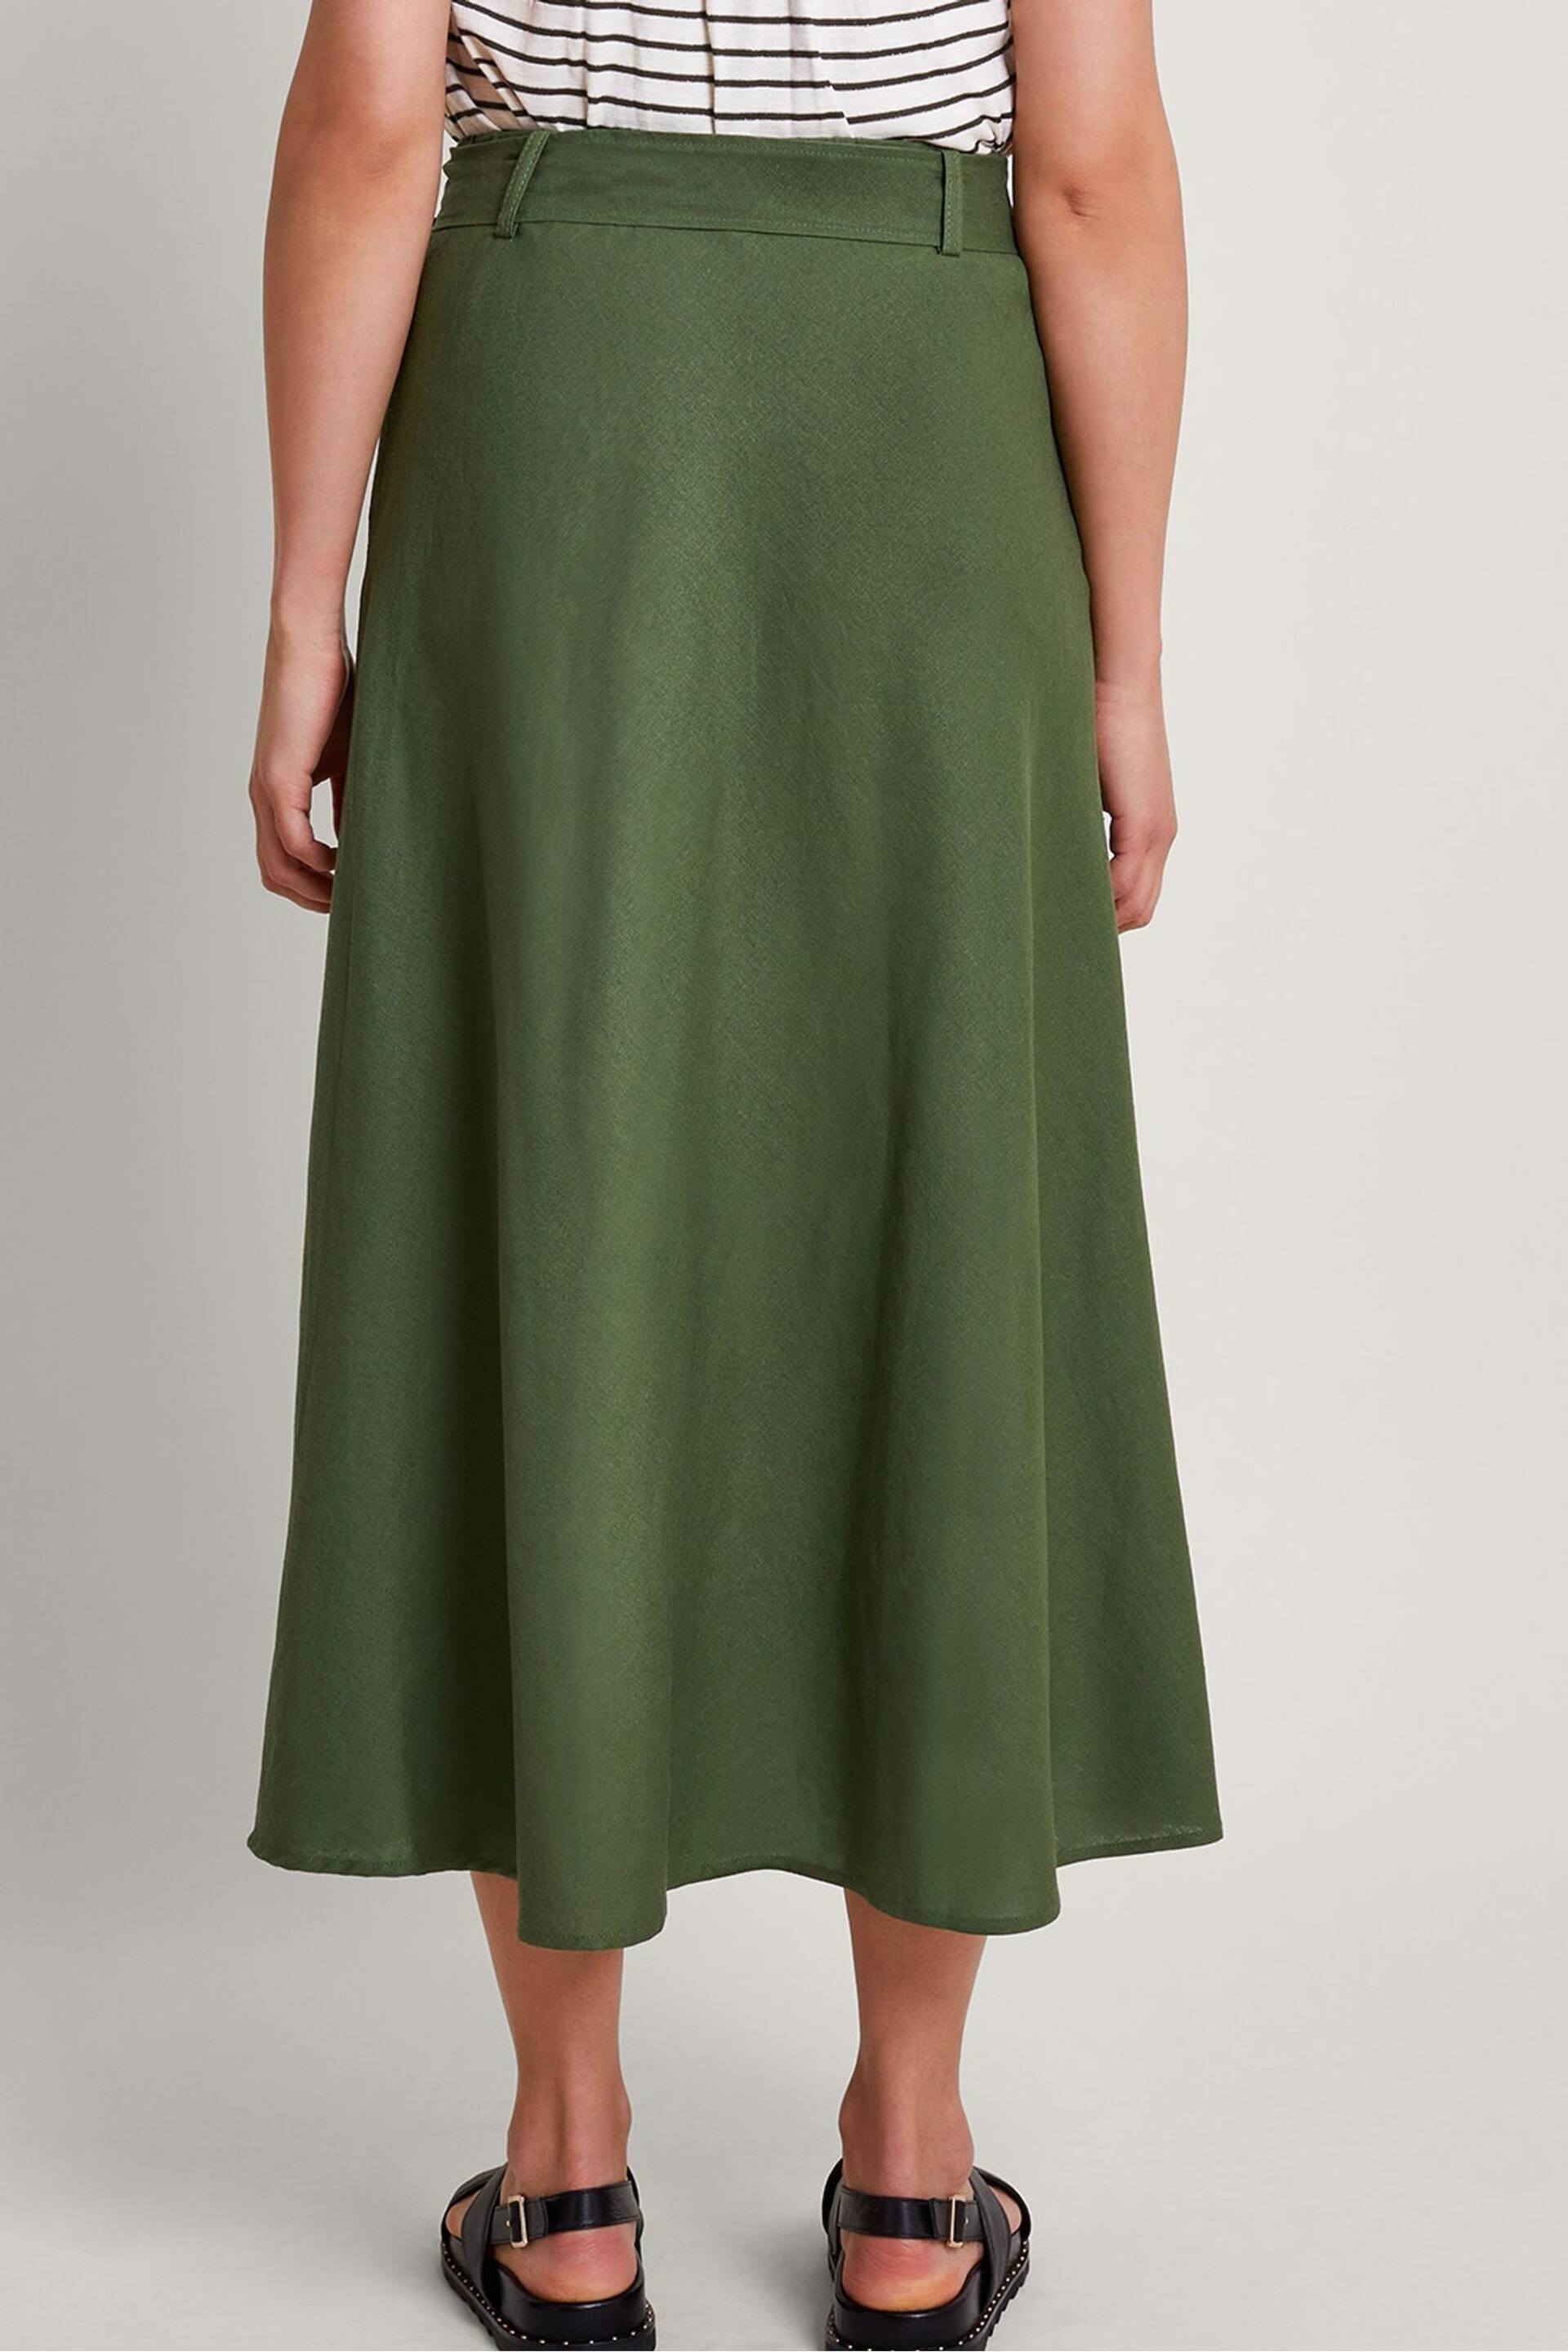 Monsoon Green Belted Midi Skirt - Image 3 of 5